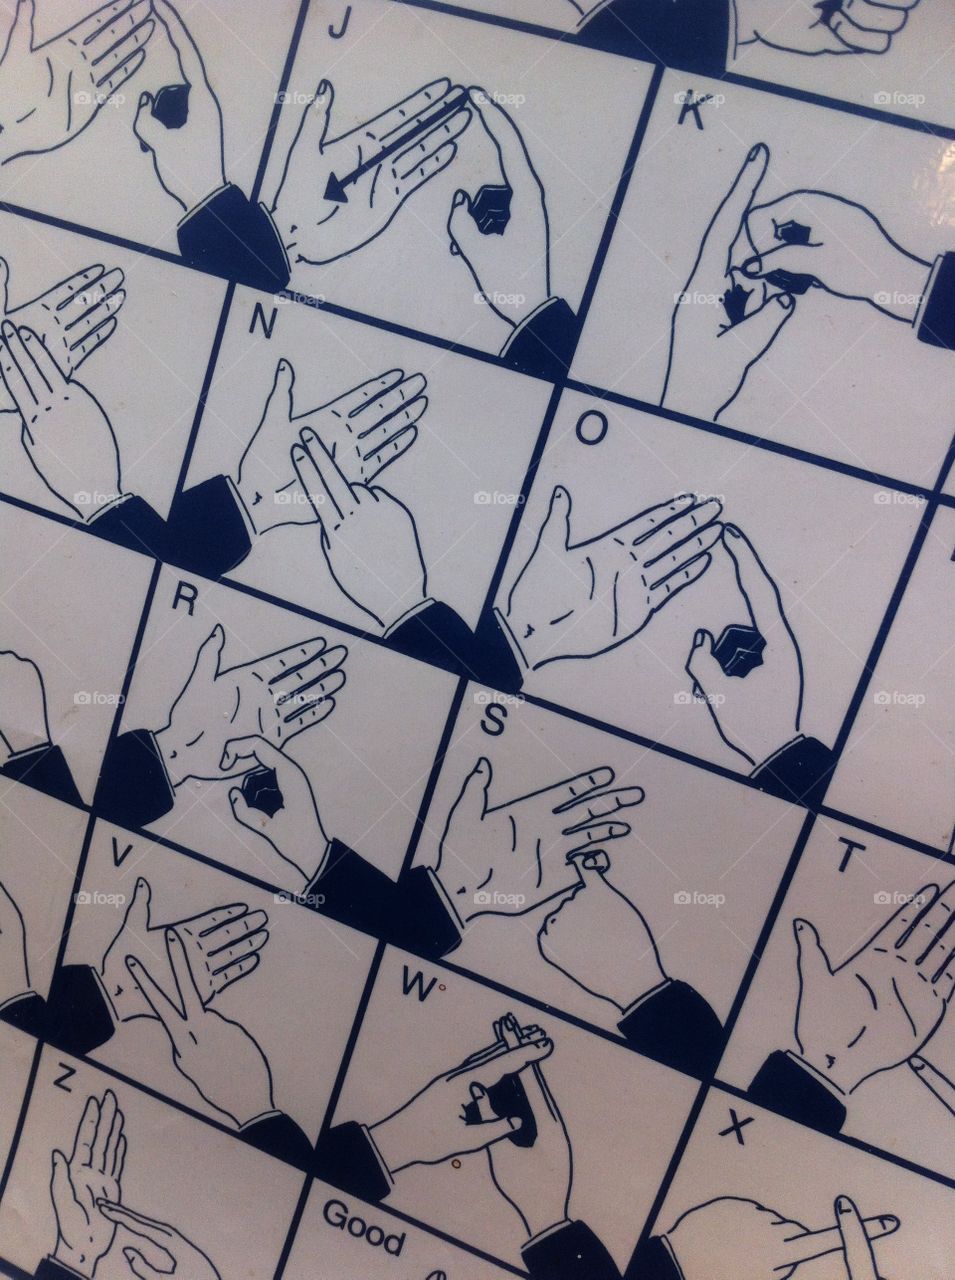 sign hands fingers illustration by king